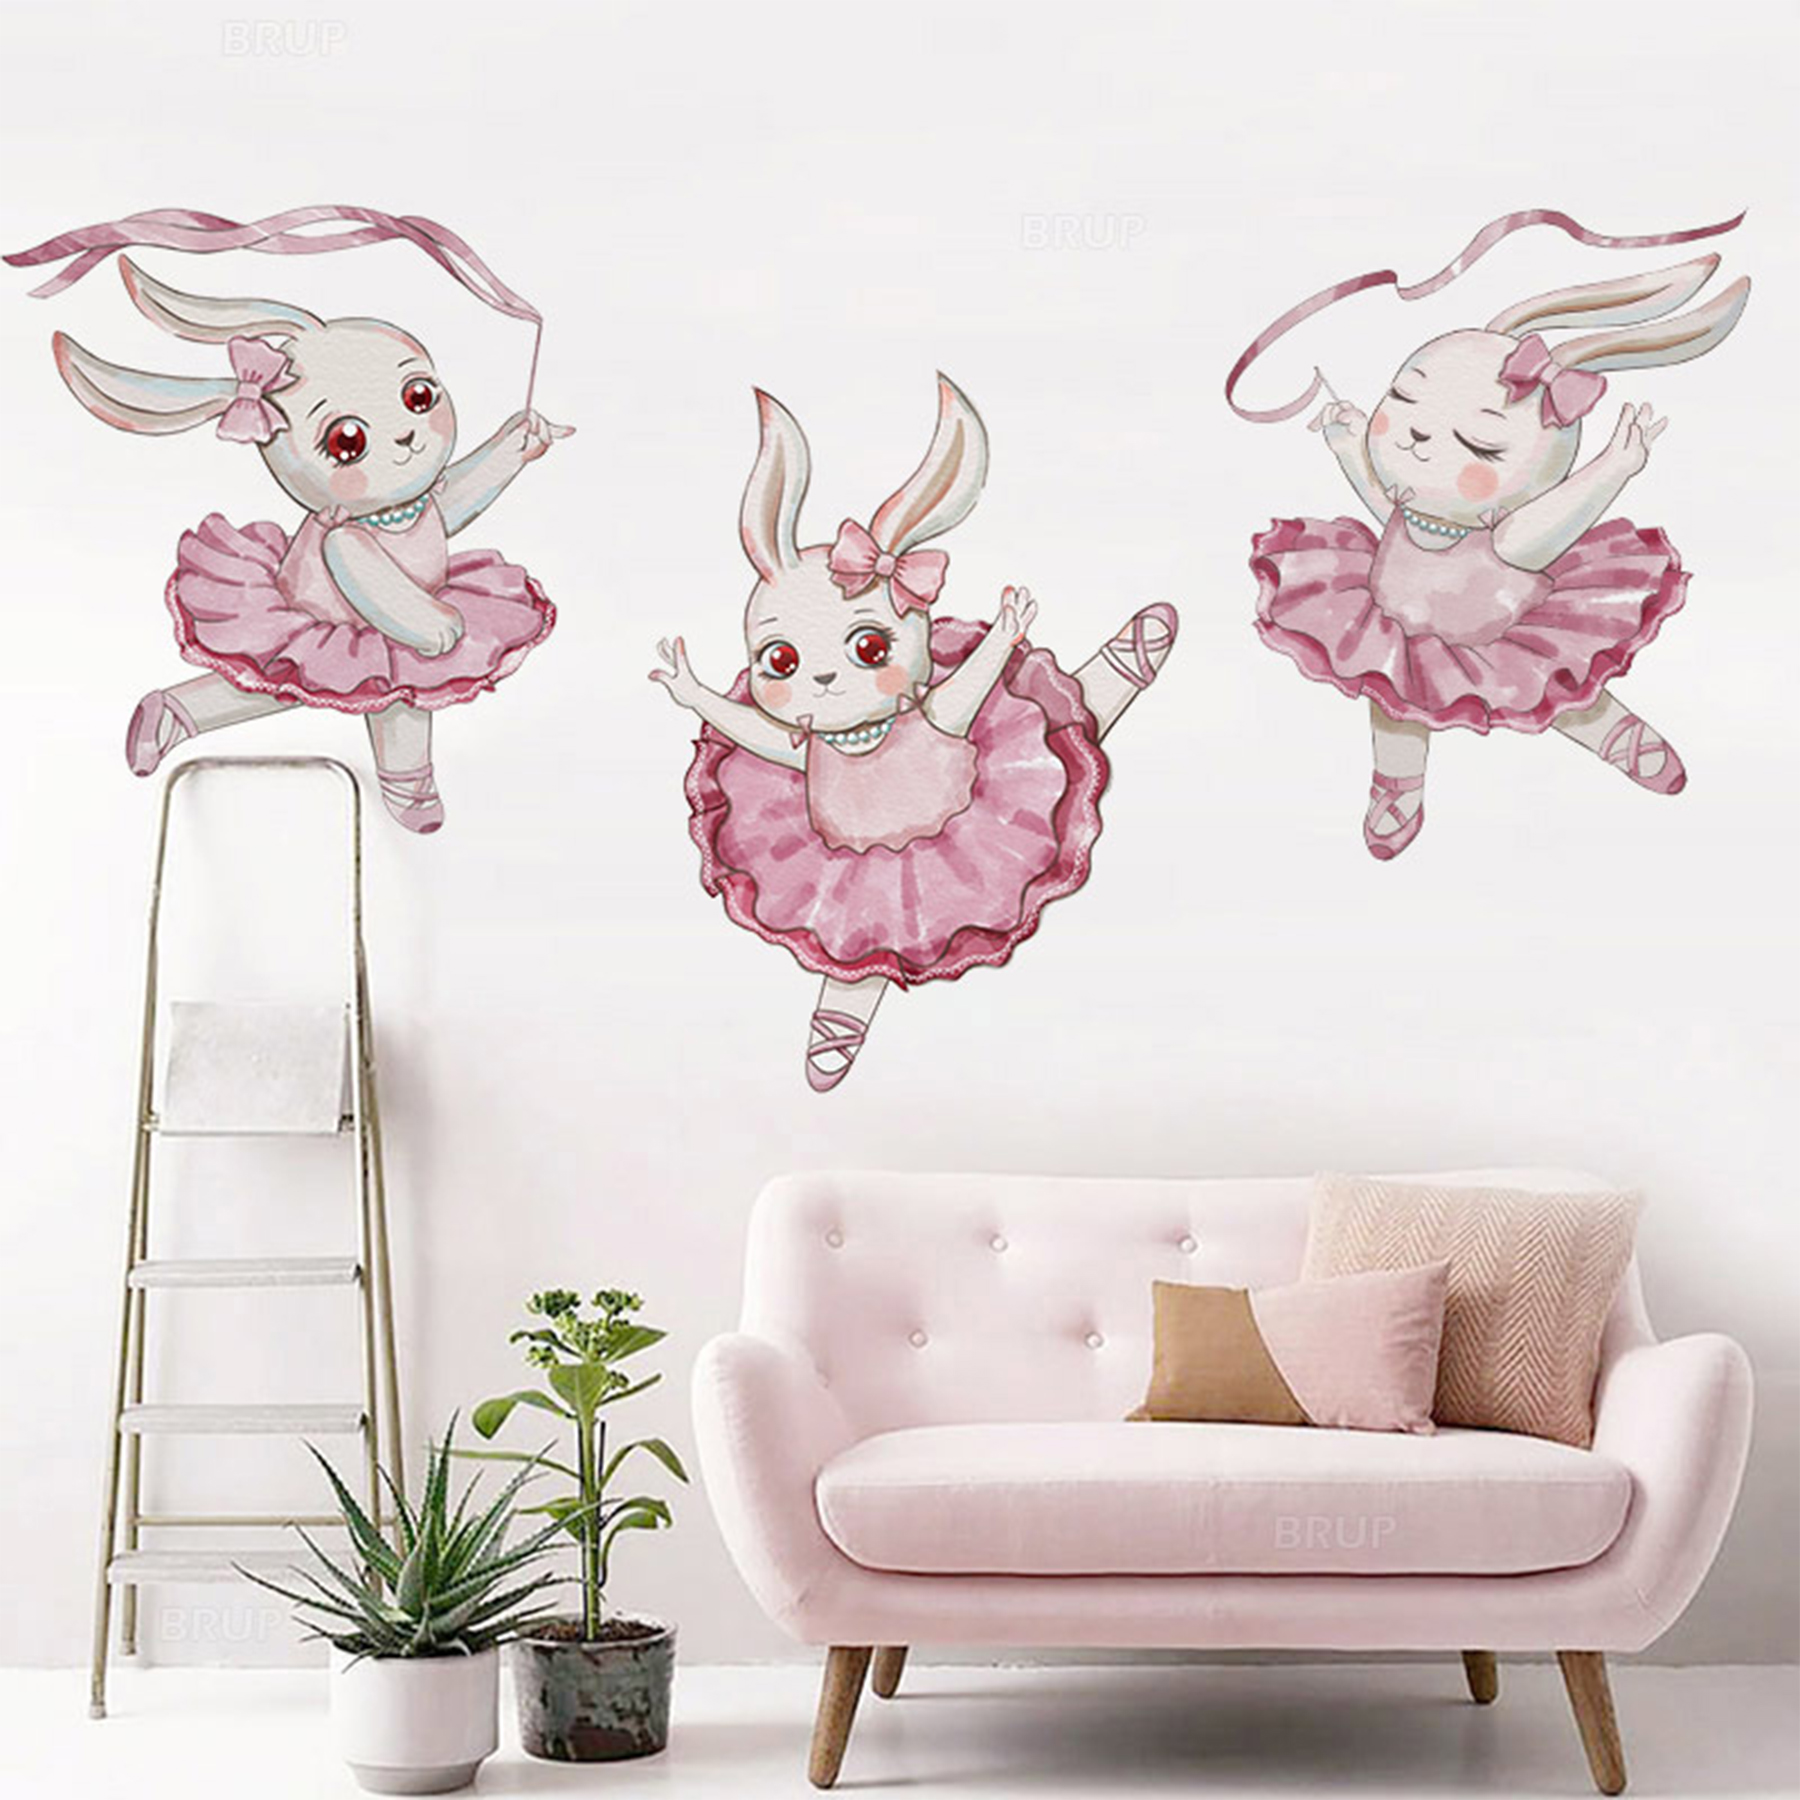 Sipo Wall Sticker Ballerina Bunny